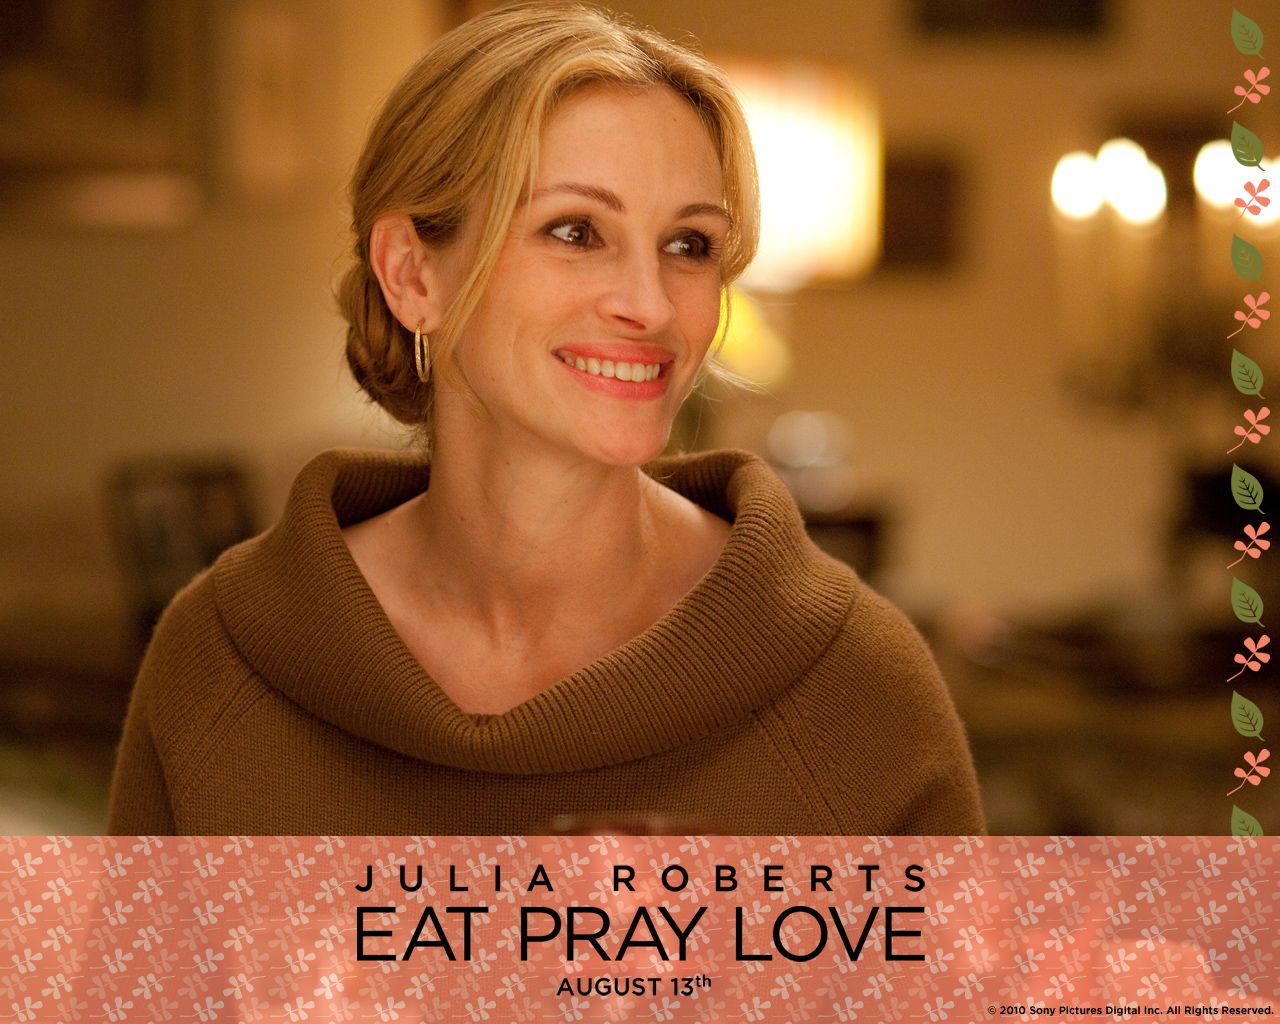 Best image about Eat Pray Love Eat pray love 1920×1080 Eat Pray Love Wallpaper (38 Wallpaper).. Eat pray love, Eat pray love movie, Love trailer